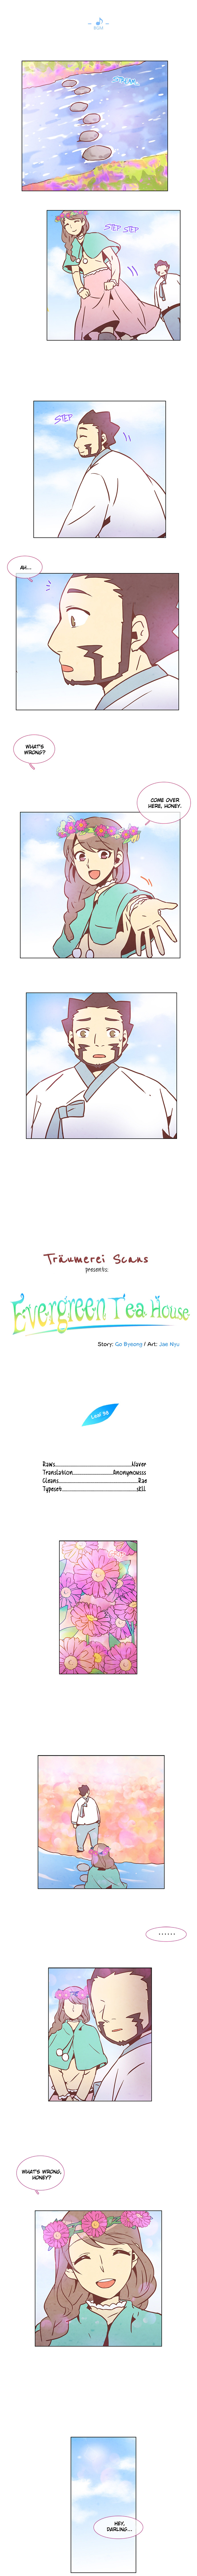 Evergreen Tea Shop Chapter 98: Realization